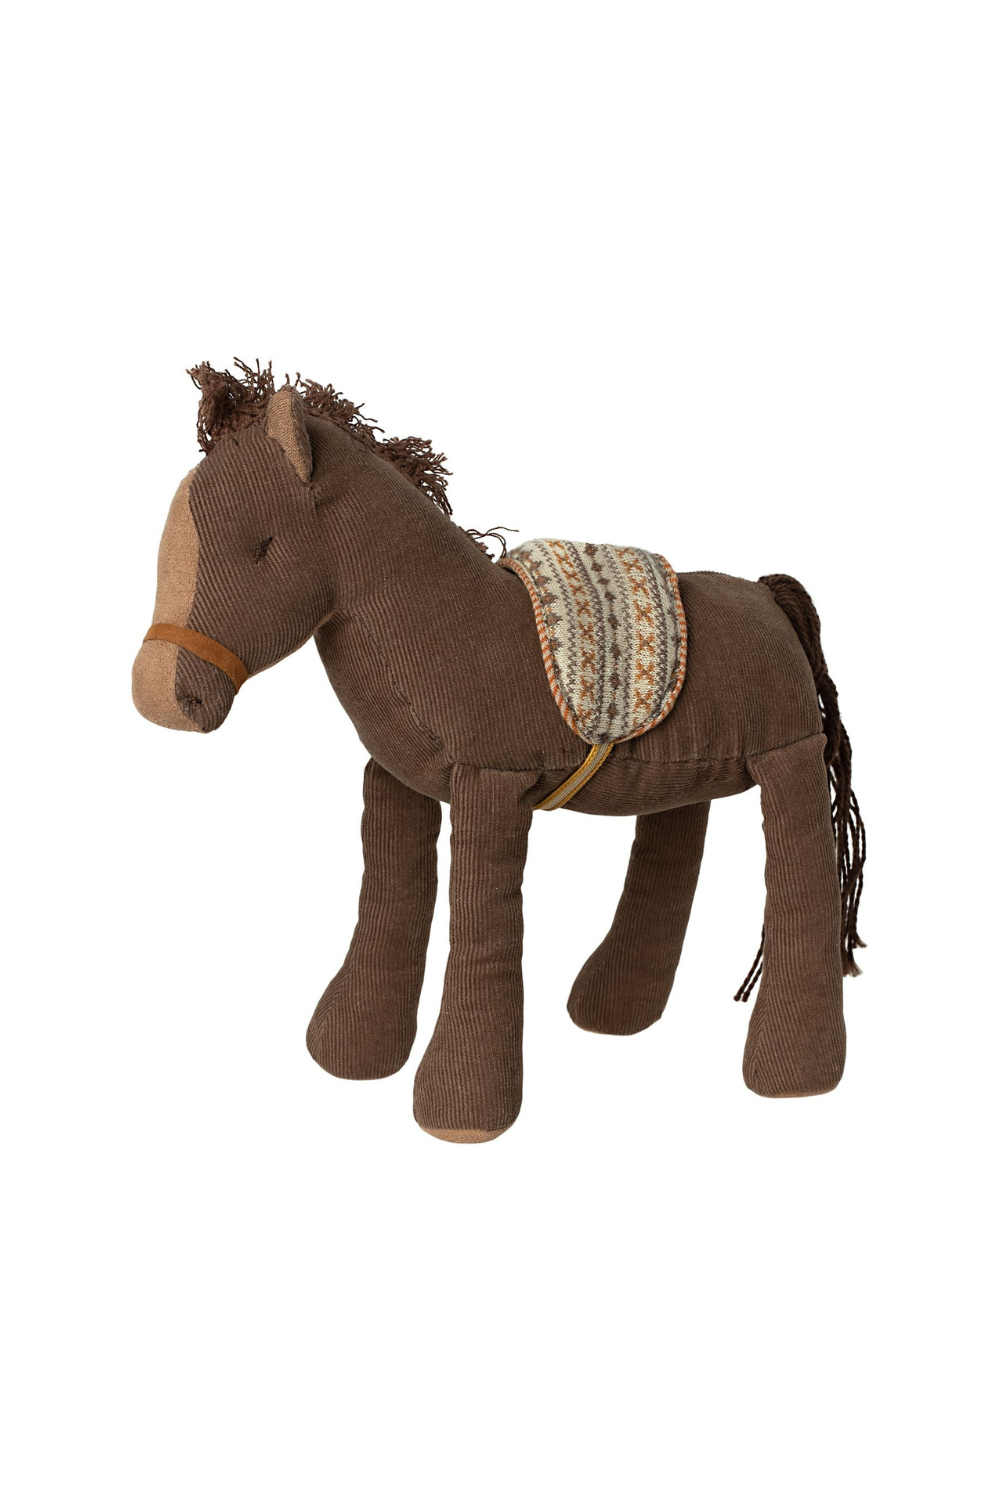 Maileg Pony: Charming Dollhouse Equestrian Companion